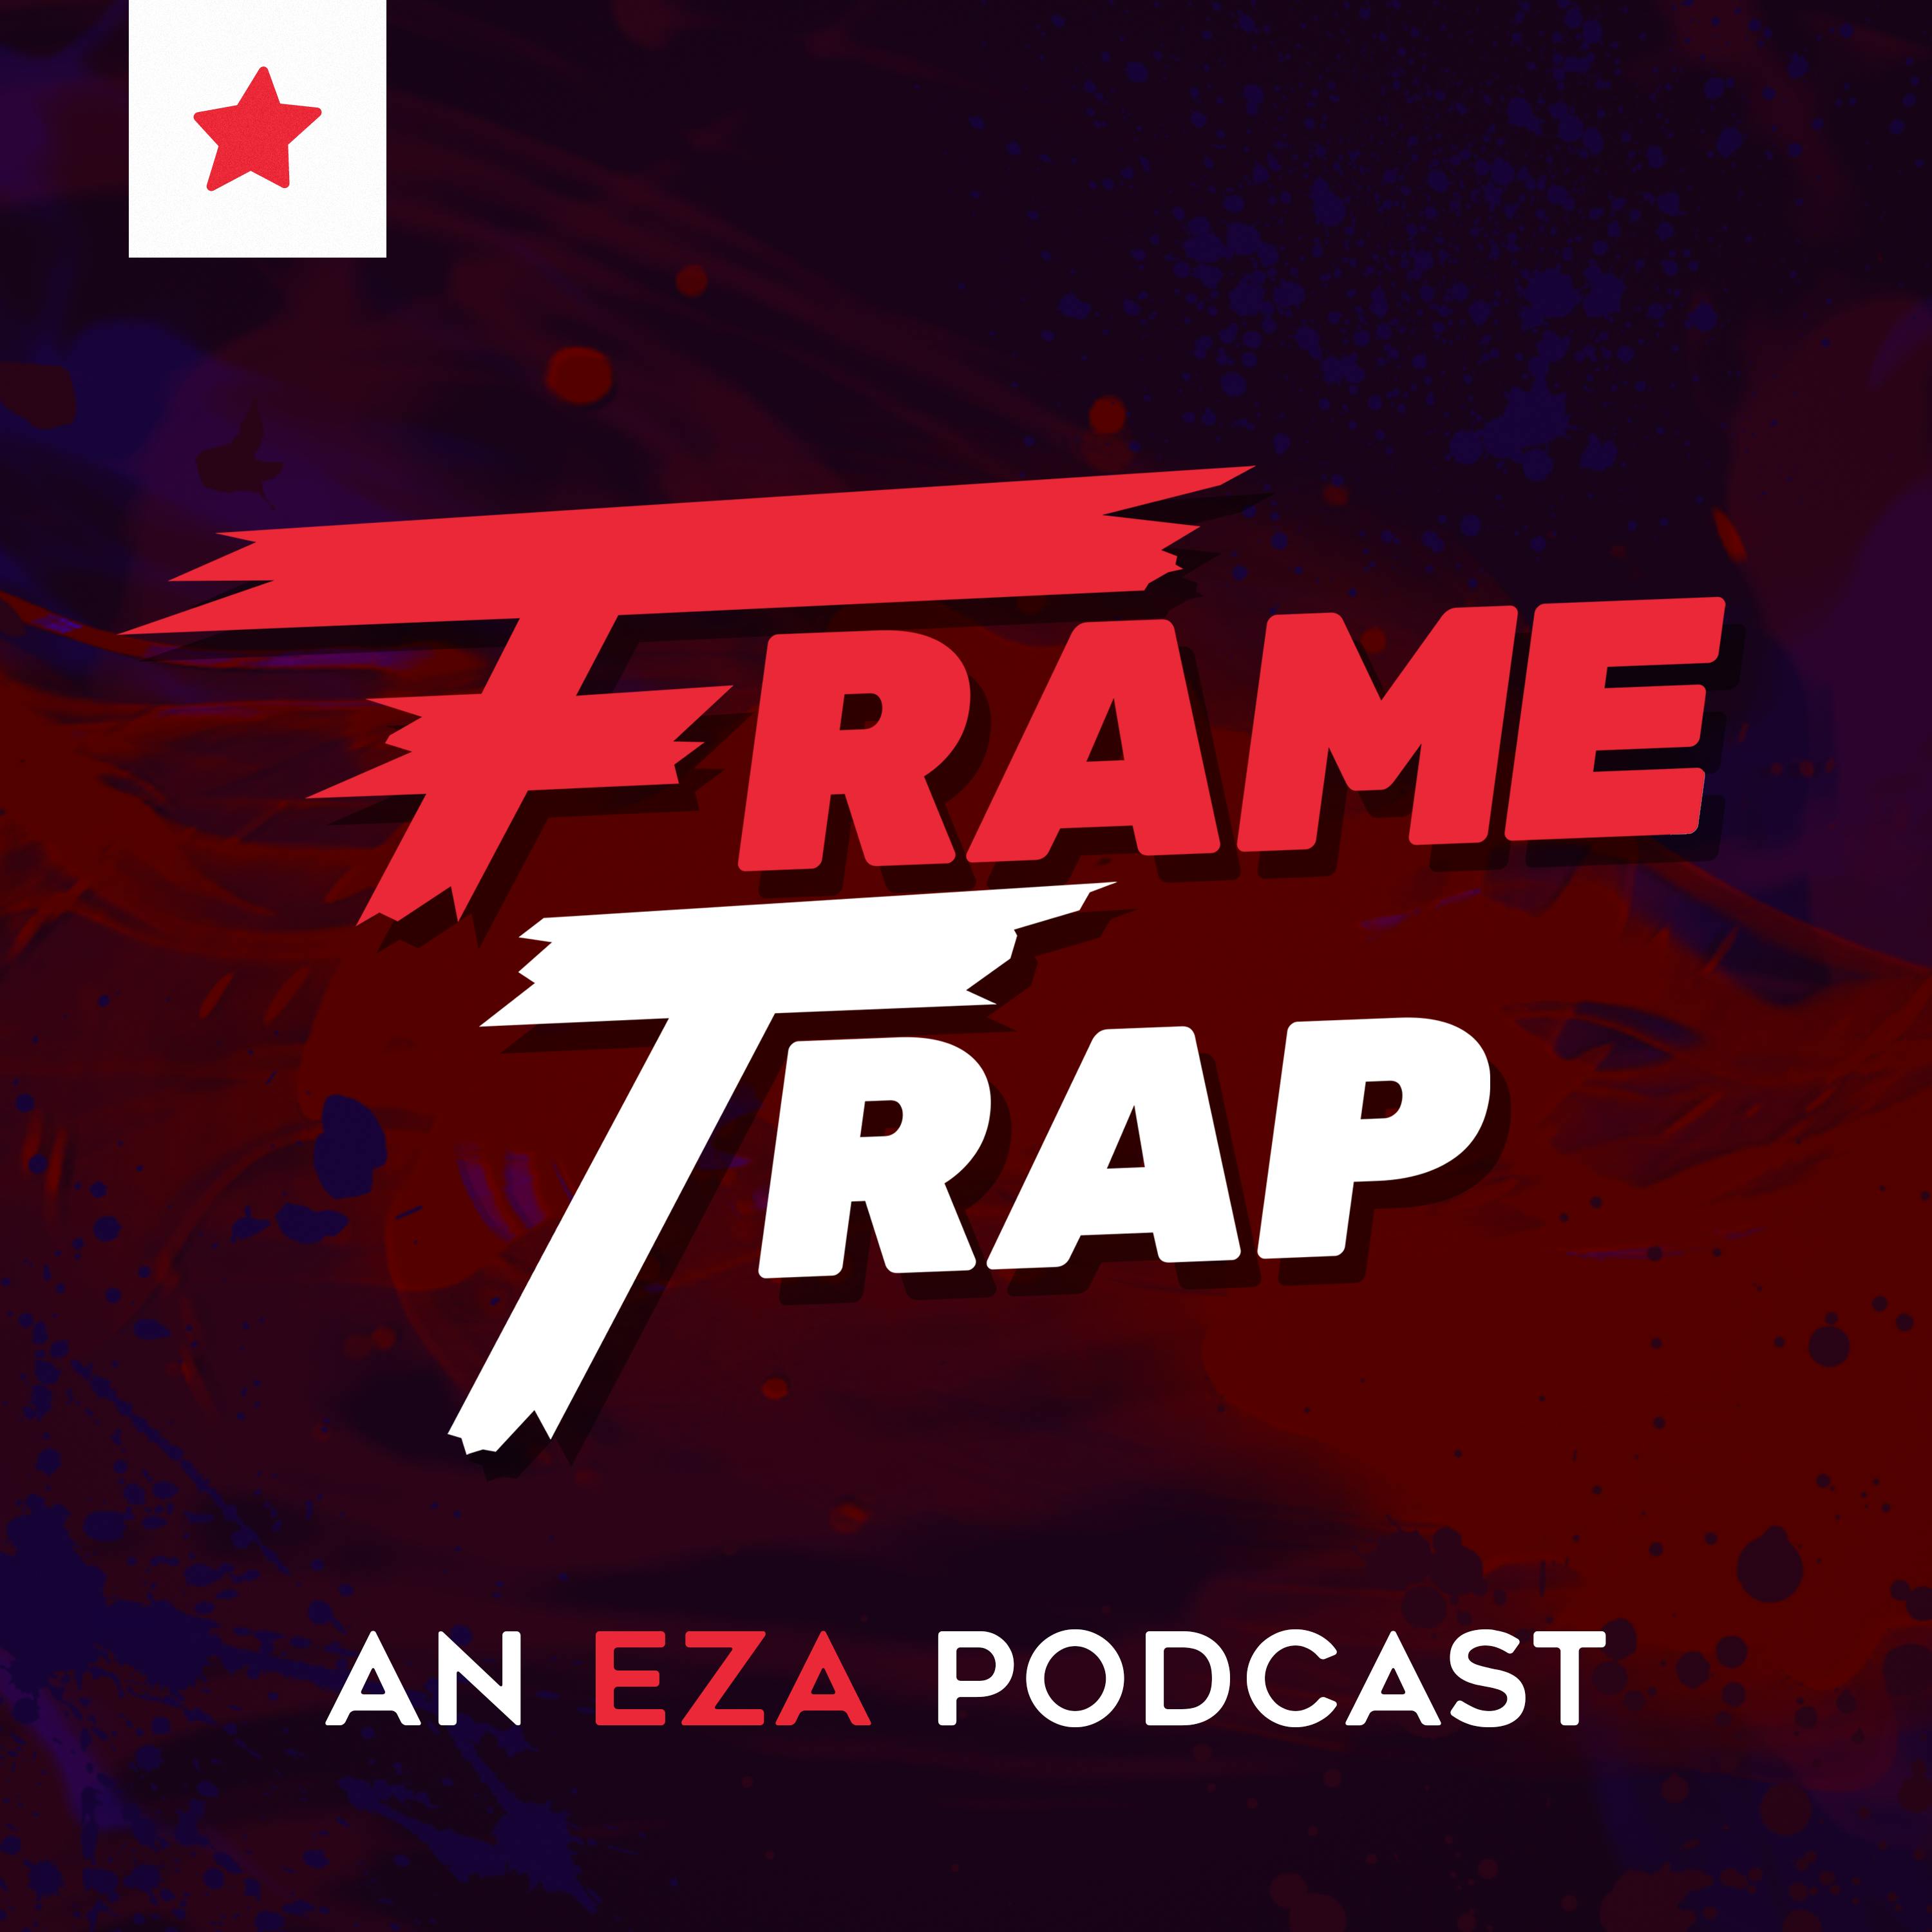 Frame Trap - Episode 192 